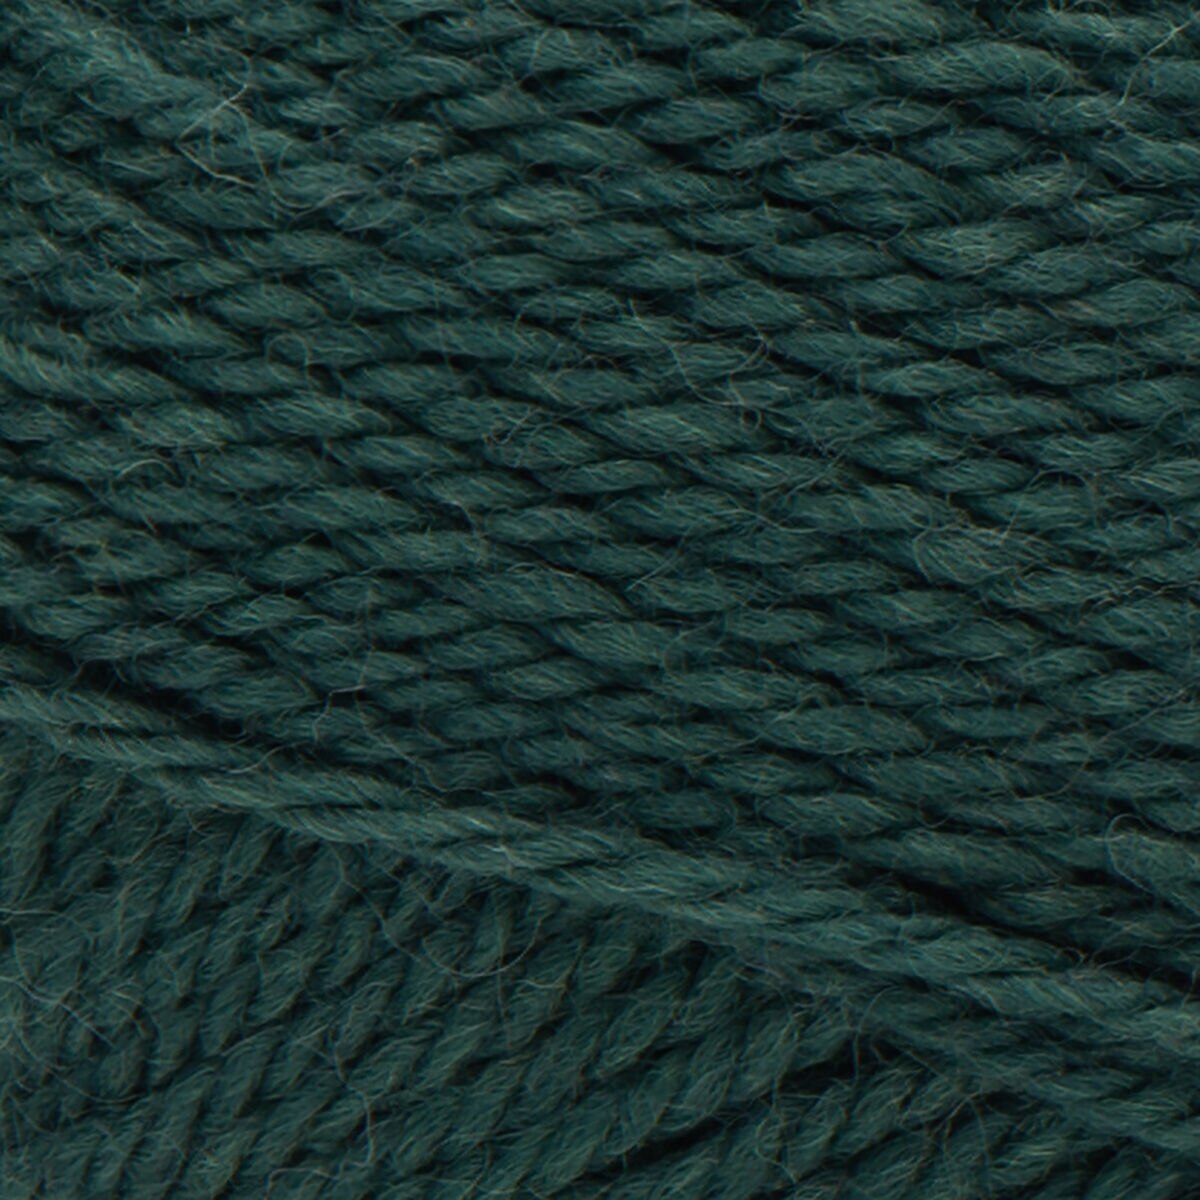 patons classic merino wool yarn